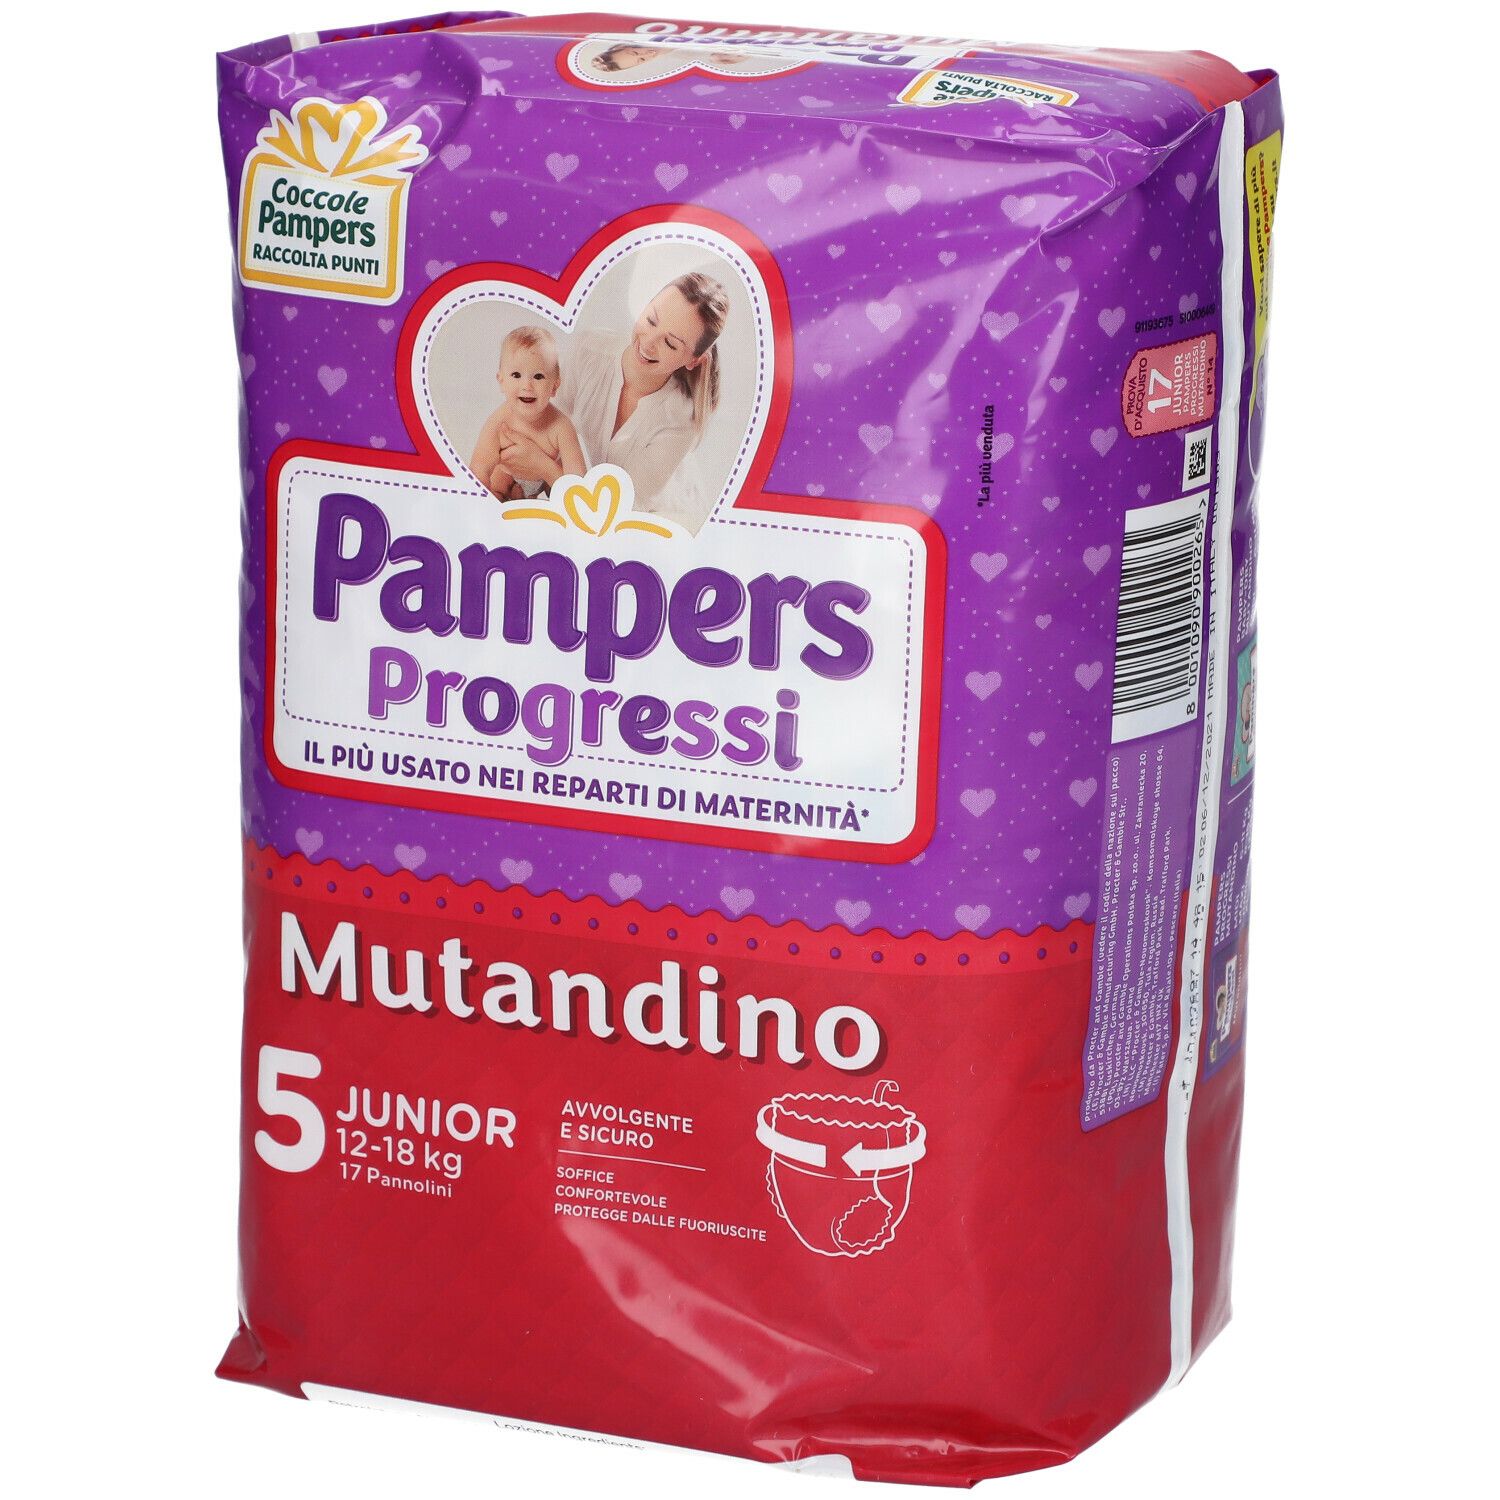 Image of Pampers Progressi Mutandino™ 5 (12-18 Kg)